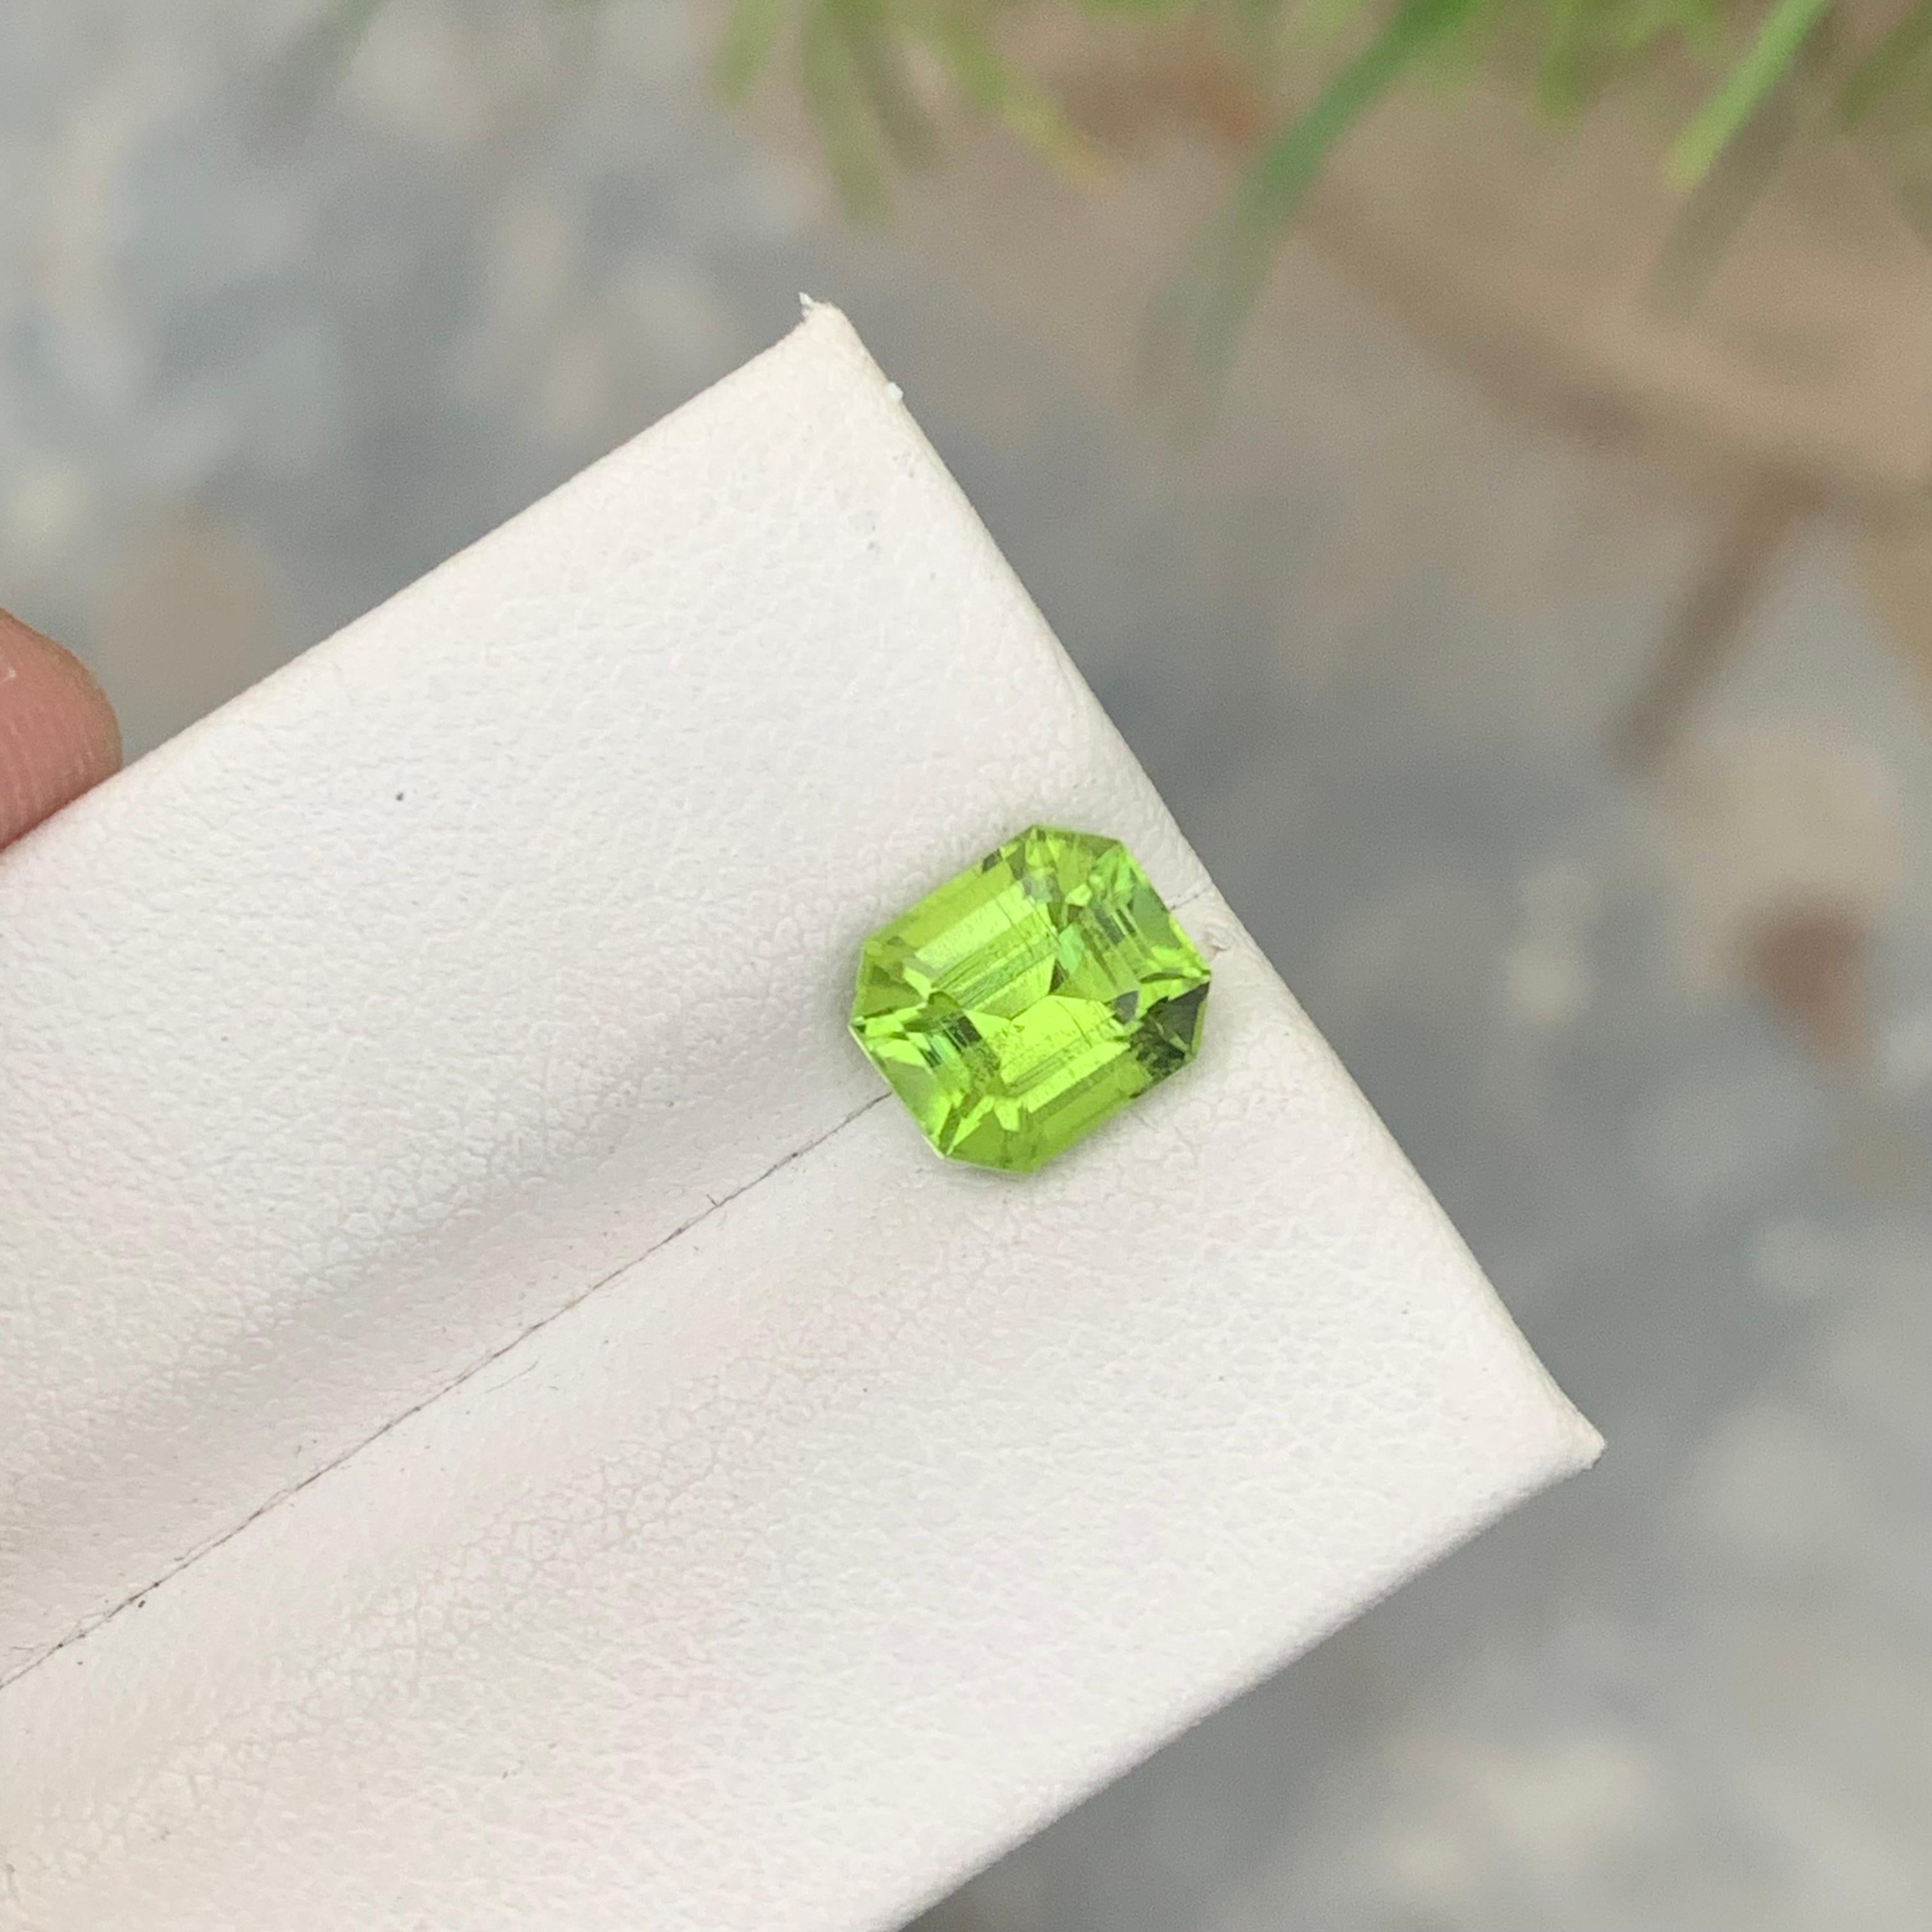 SI Clarity 2.15 Carat Natural Emerald Cut Green Peridot Gemstone Pakistan Mine For Sale 9